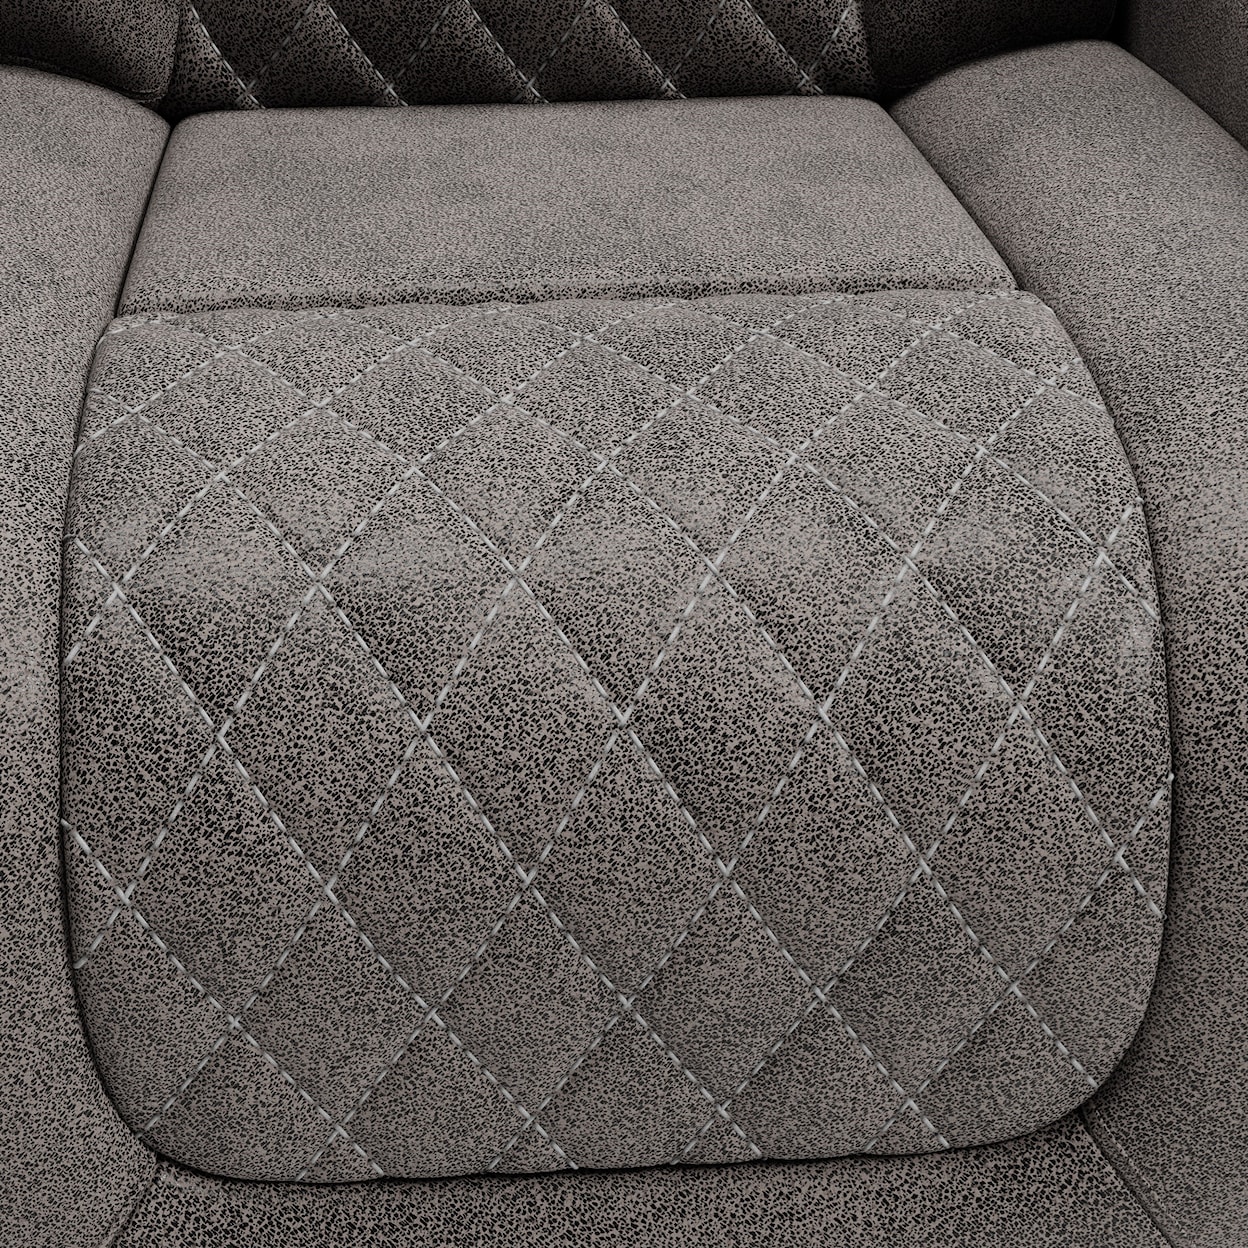 Ashley Furniture Signature Design Hyllmont Pwr Rec Sofa with Adj Headrests